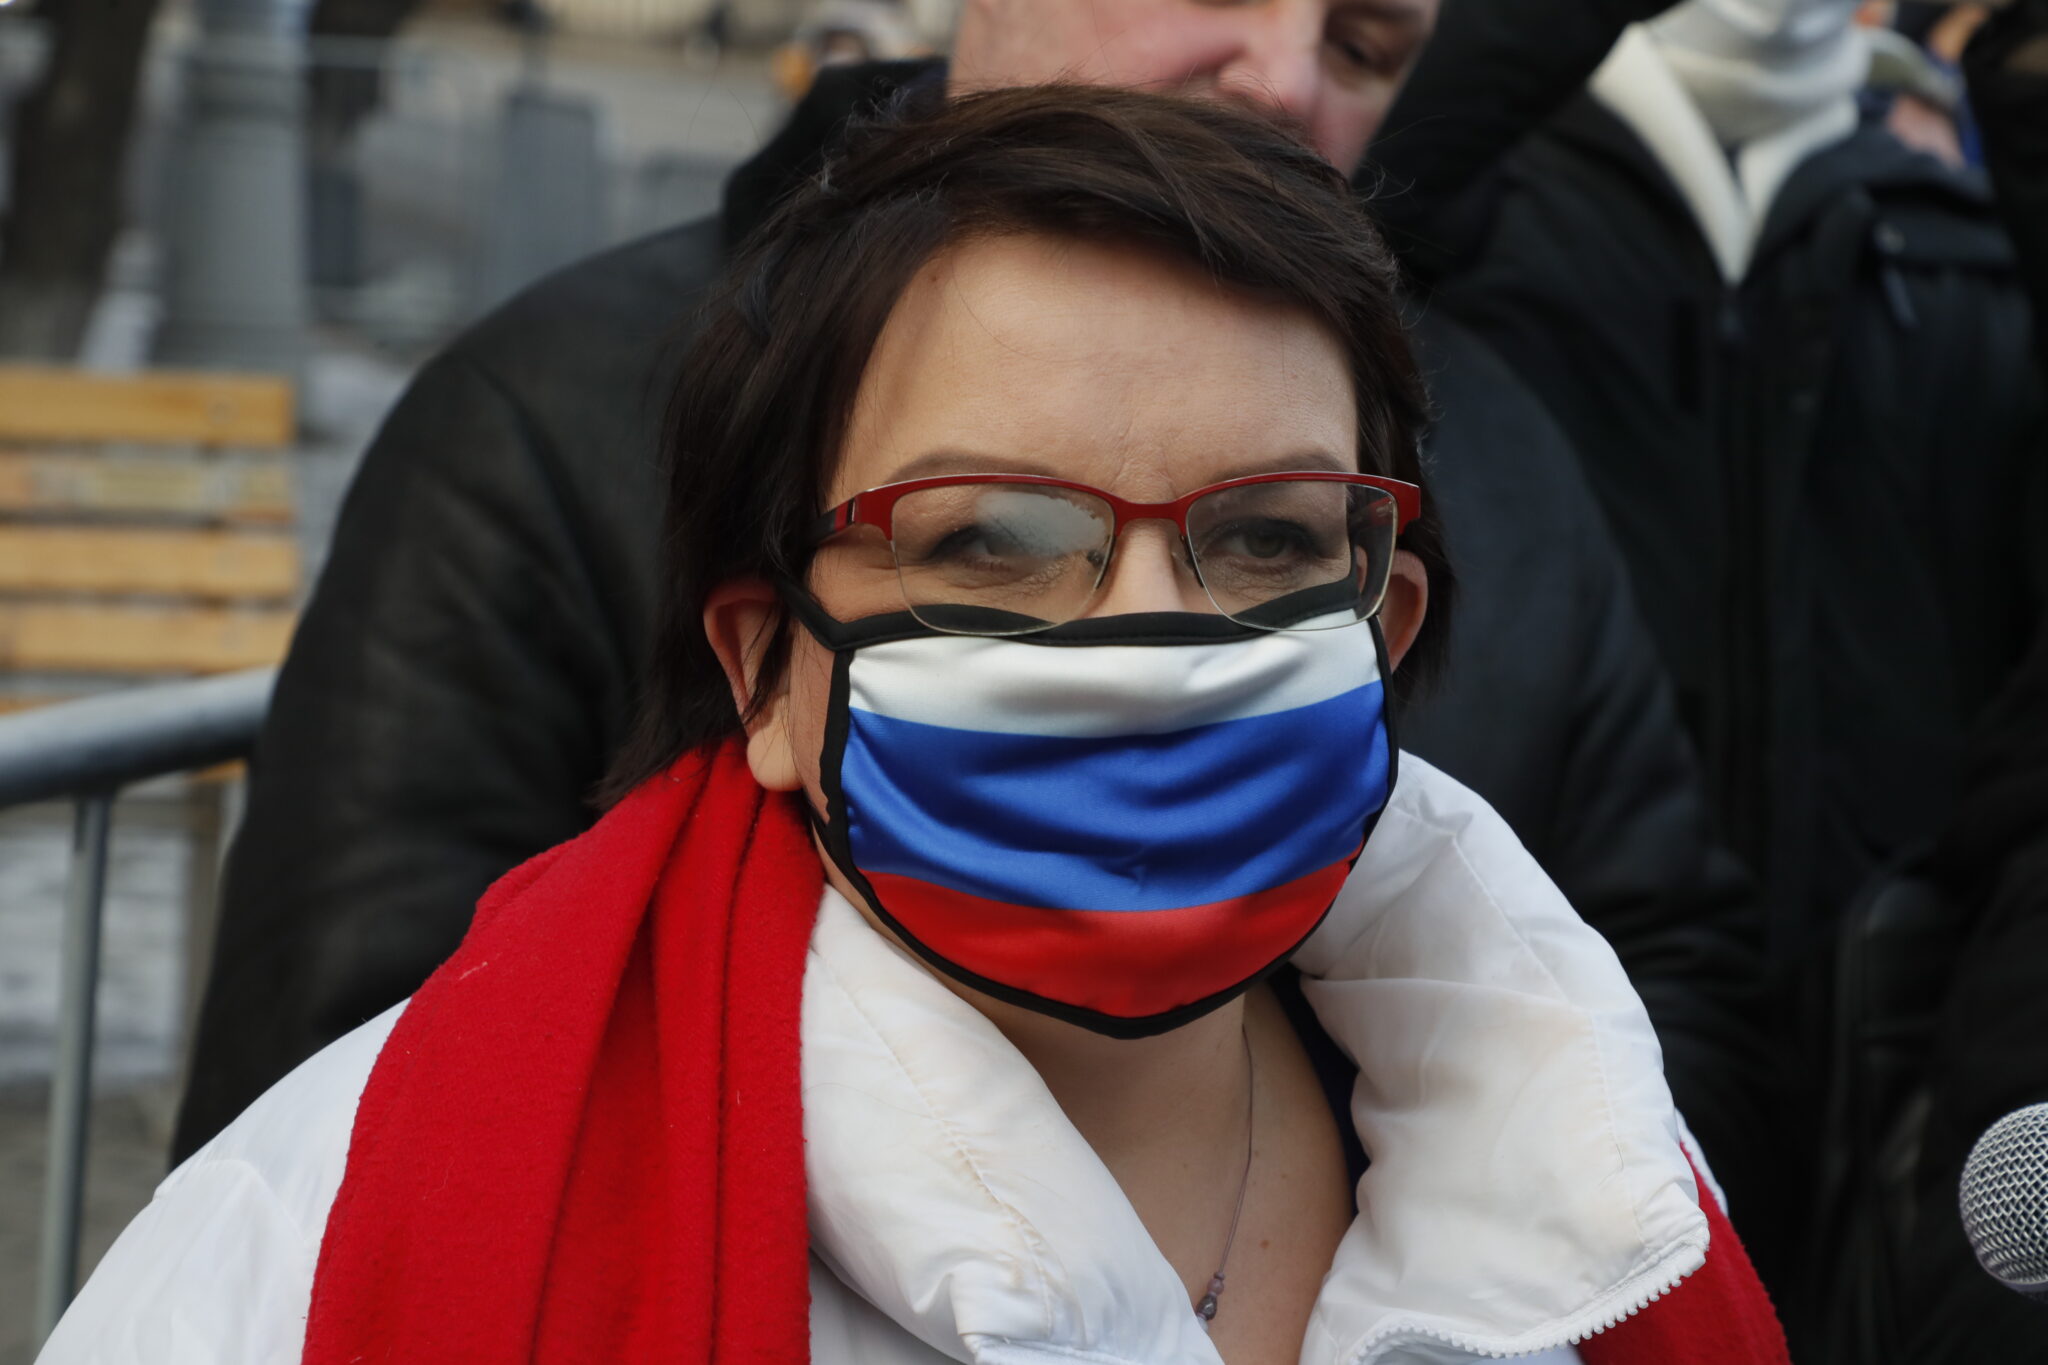 Юлия Галямина перед оглашением приговора. Фото EPA/SERGEI ILNITSKY/Scanpix/Leta